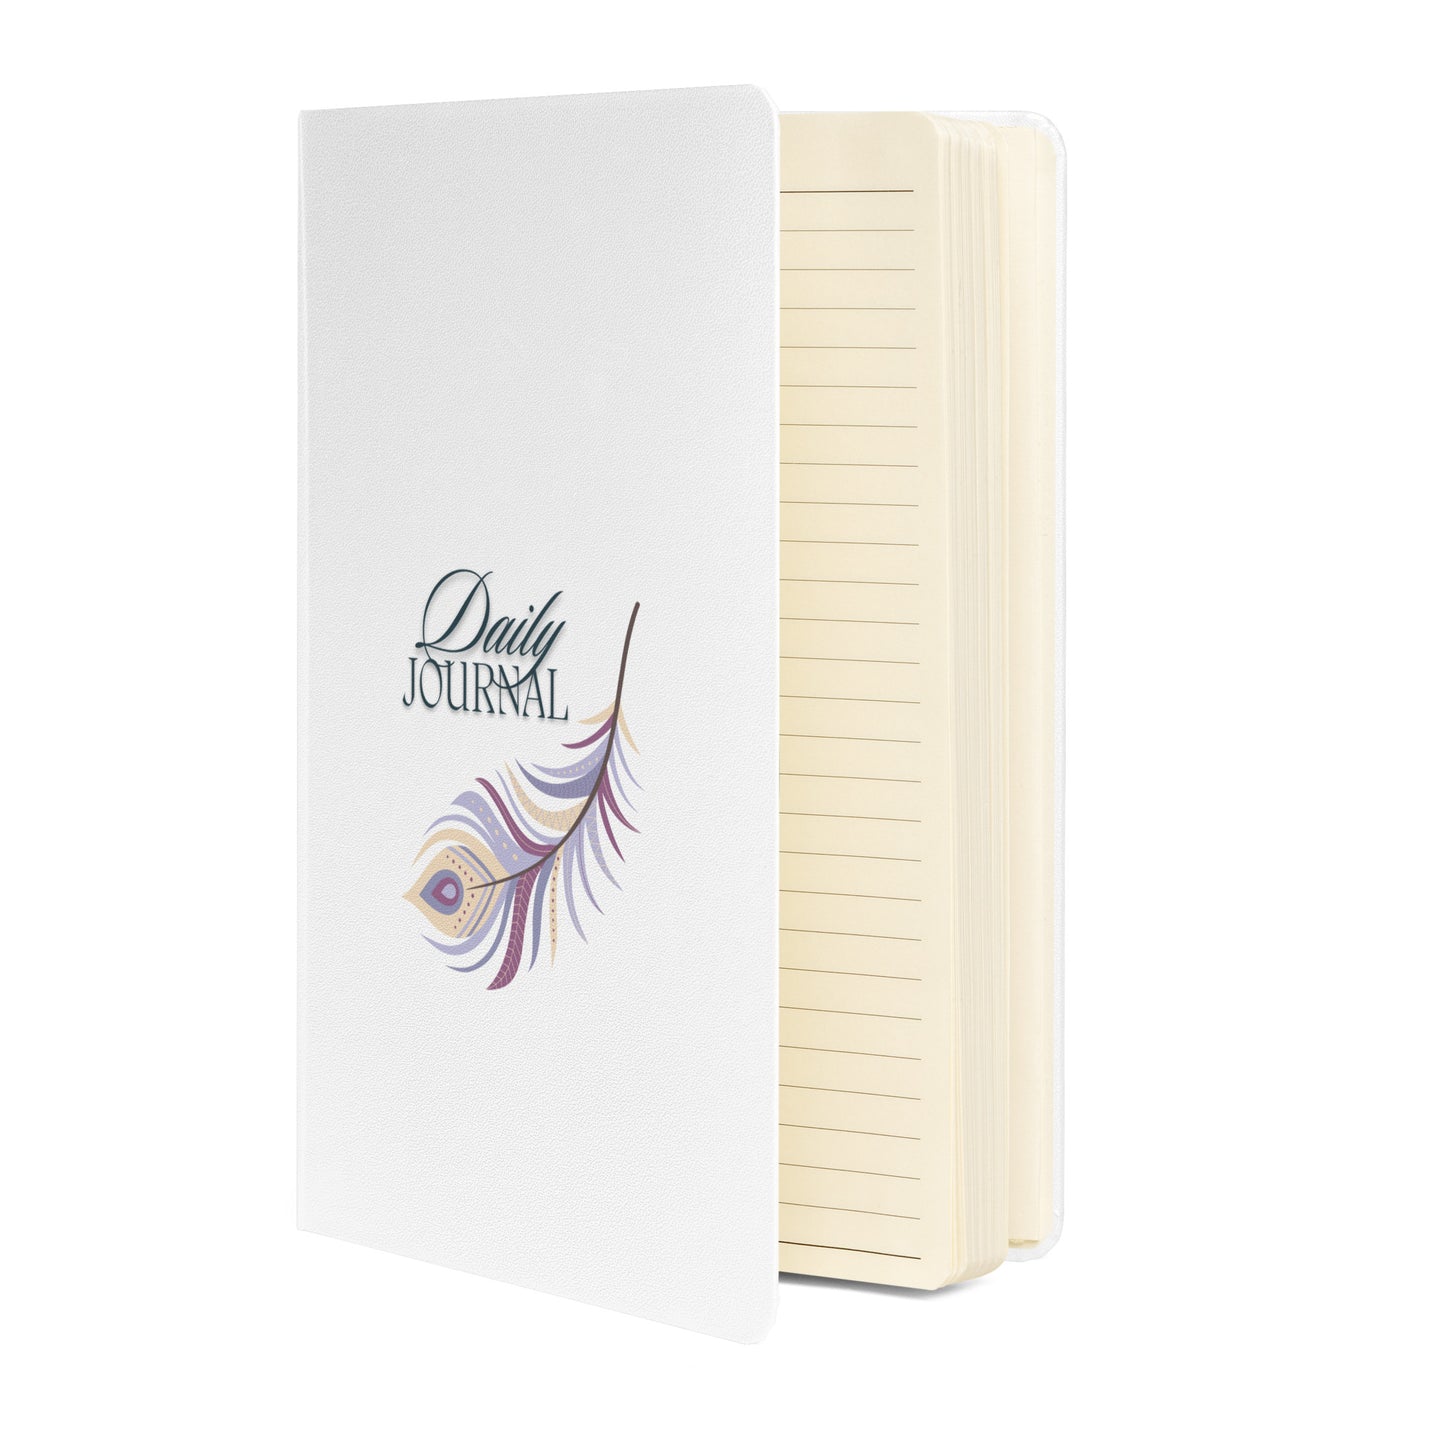 Notebook - Hardcover bound